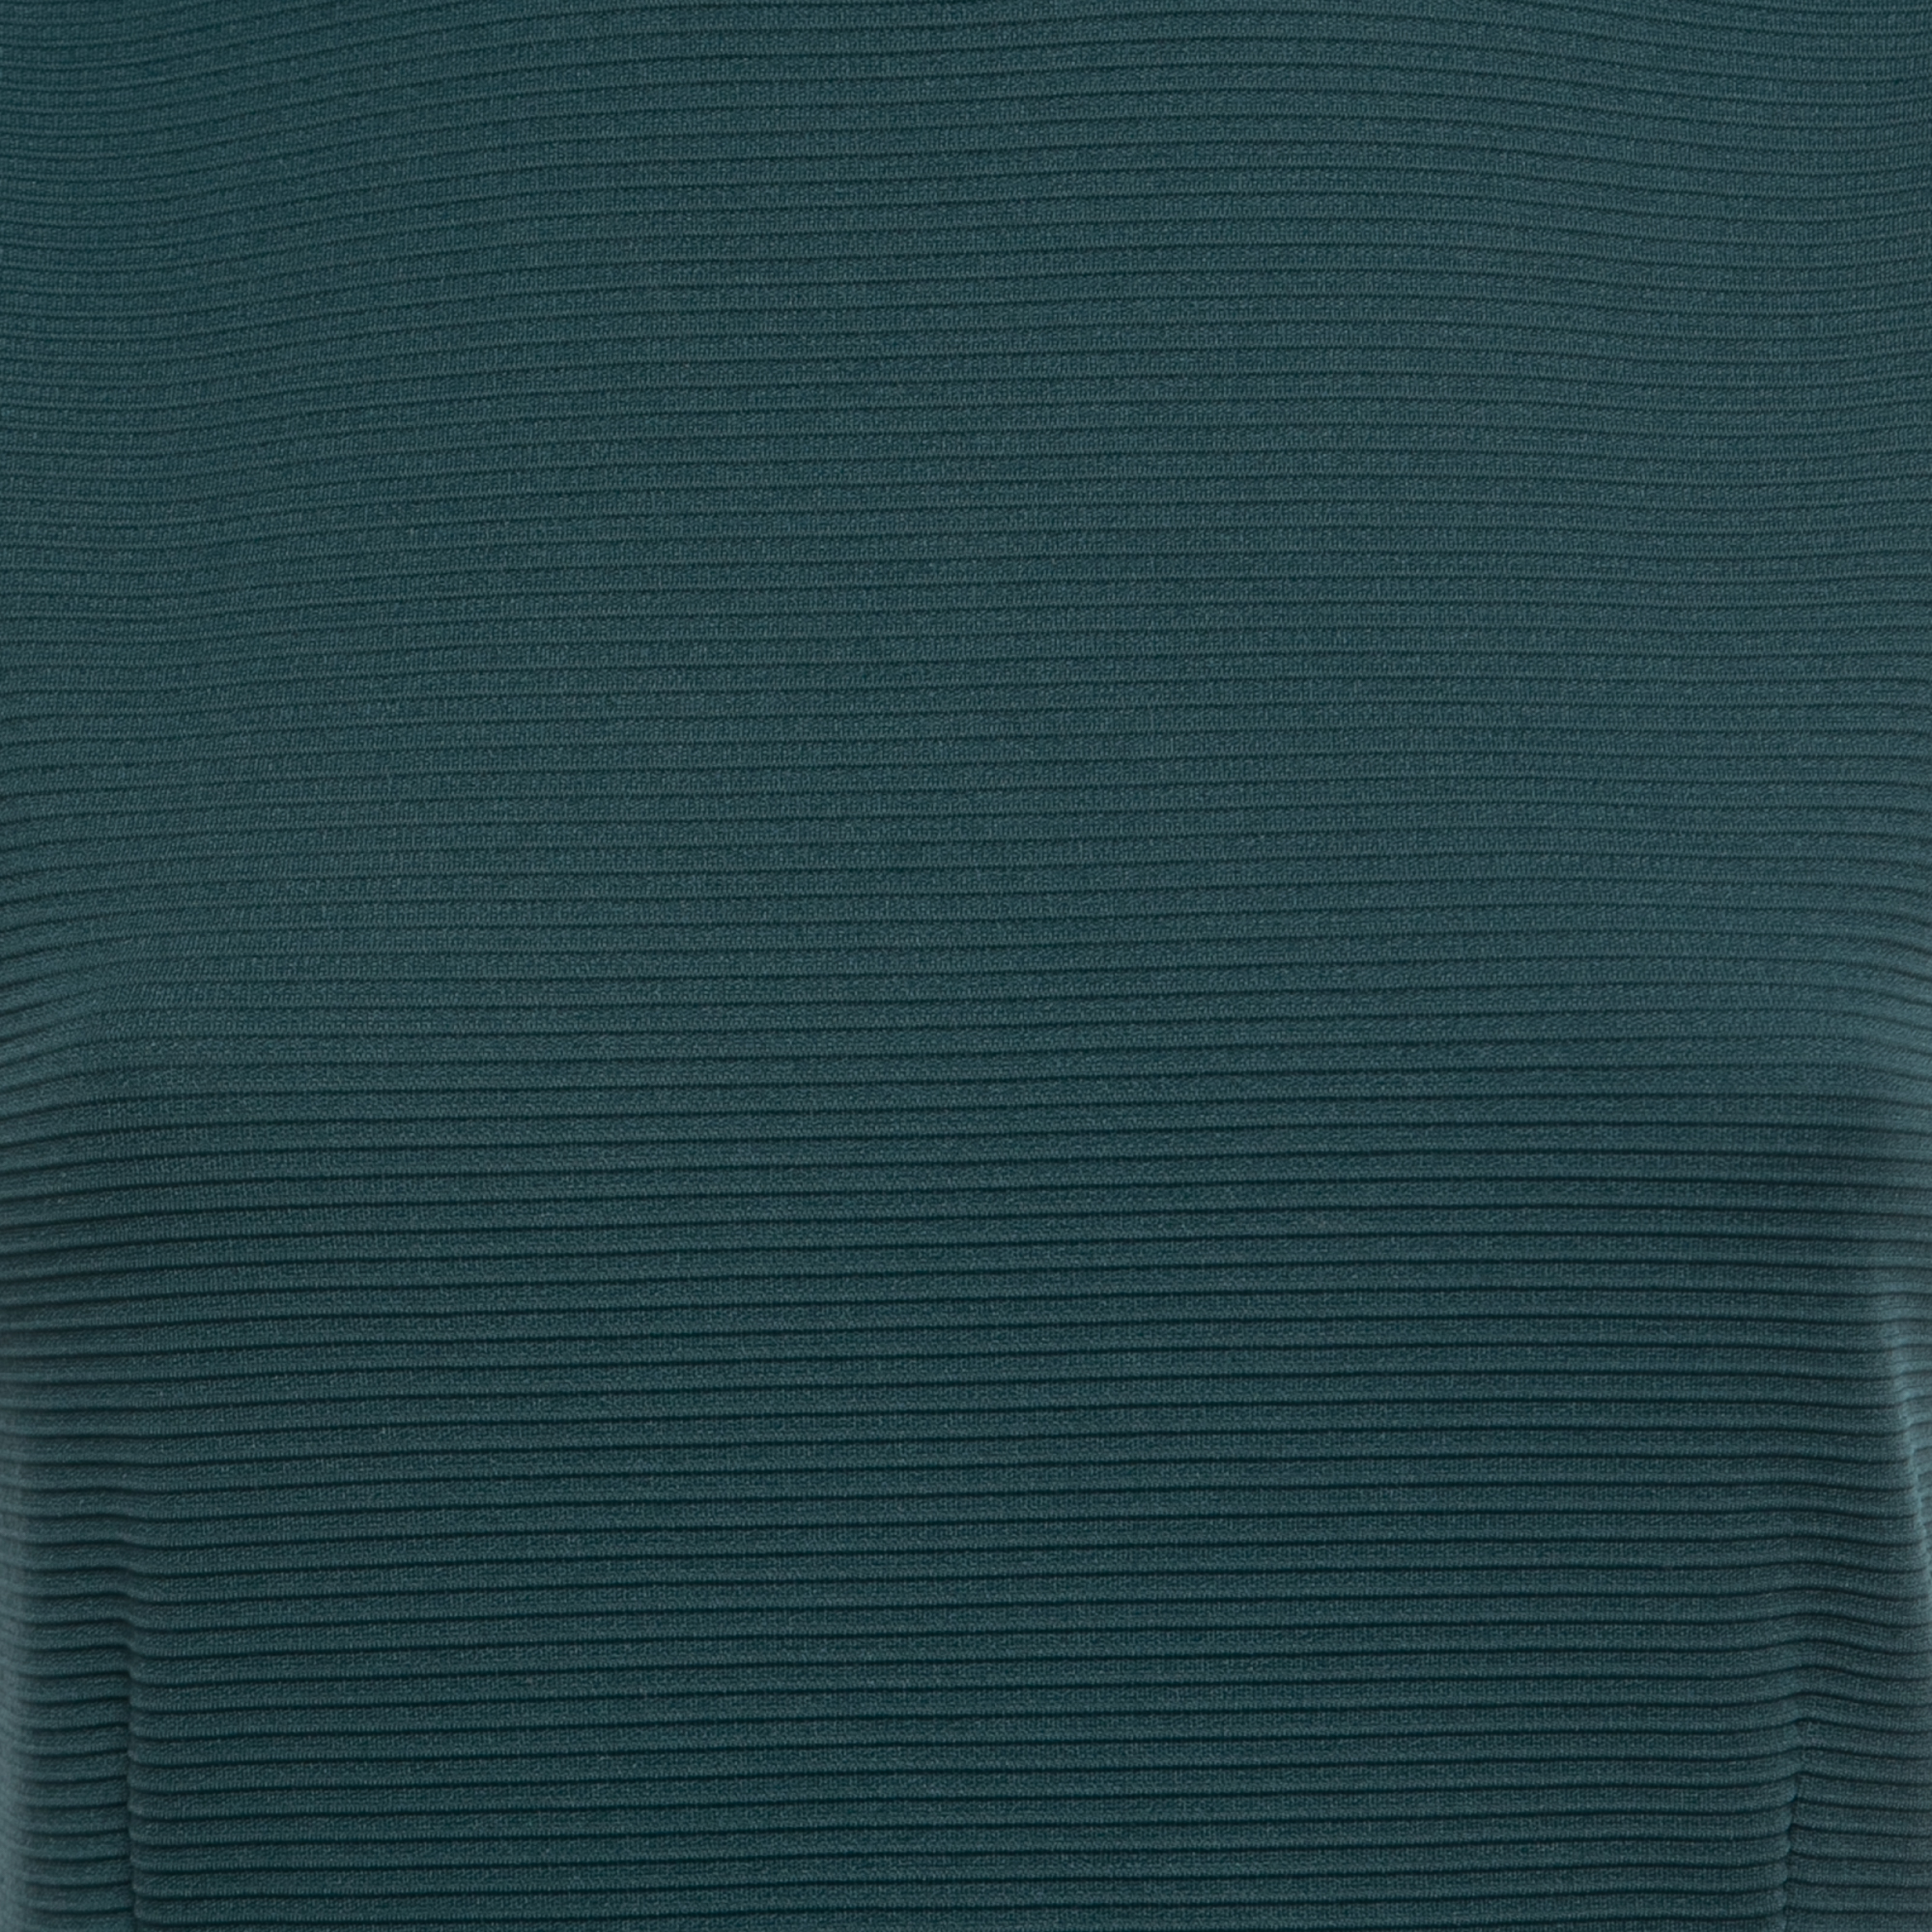 Kenzo Dark Green Textured Knit Zip Detailed Sleeveless Top M